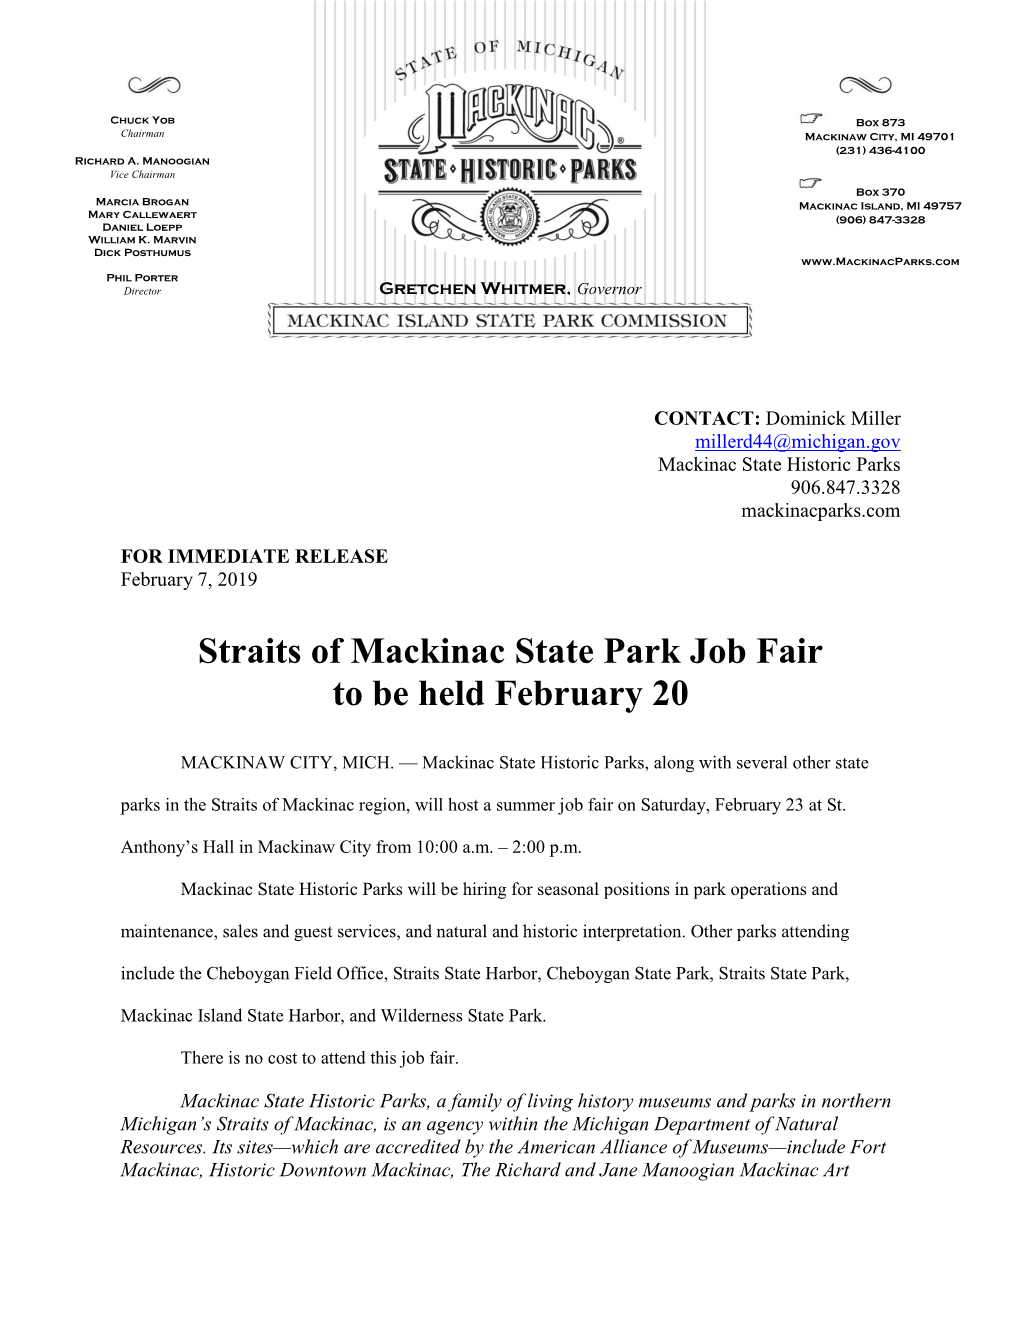 Straits of Mackinac State Park Job Fair February 23